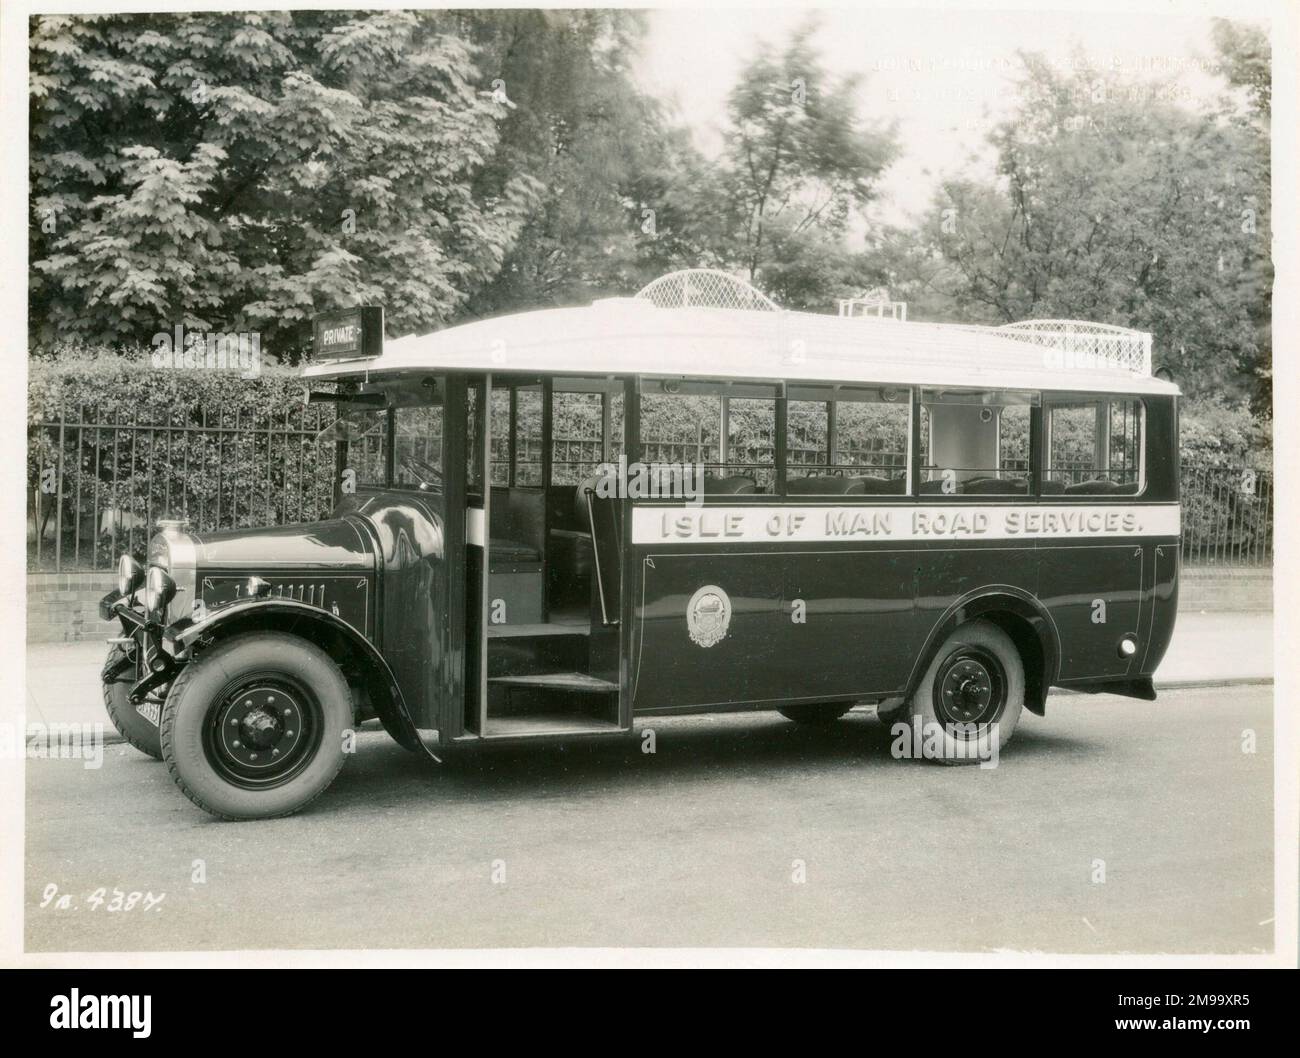 Isle of Man Road Services autobus 'Emerald', Wadham. Foto Stock